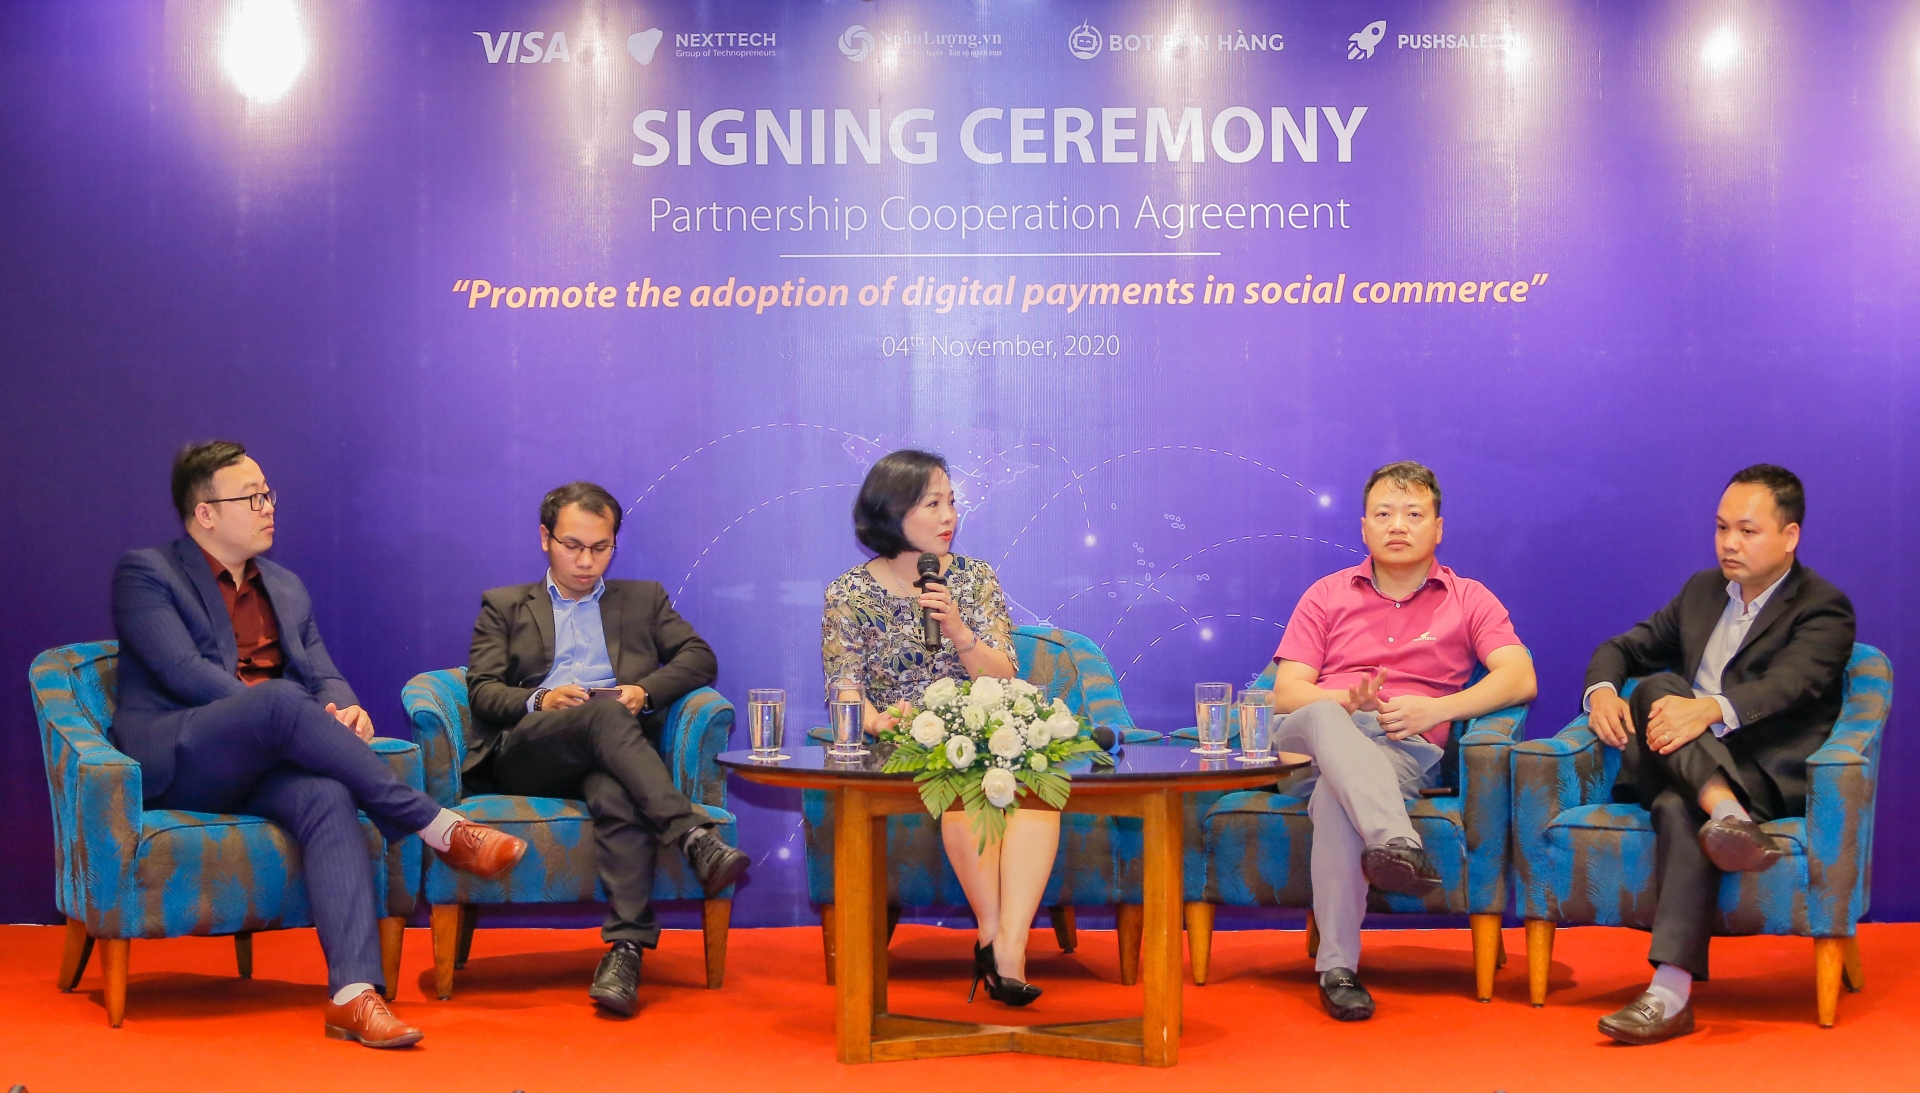 visa and nexttech sign partnership to support social commerce merchants in vietnam